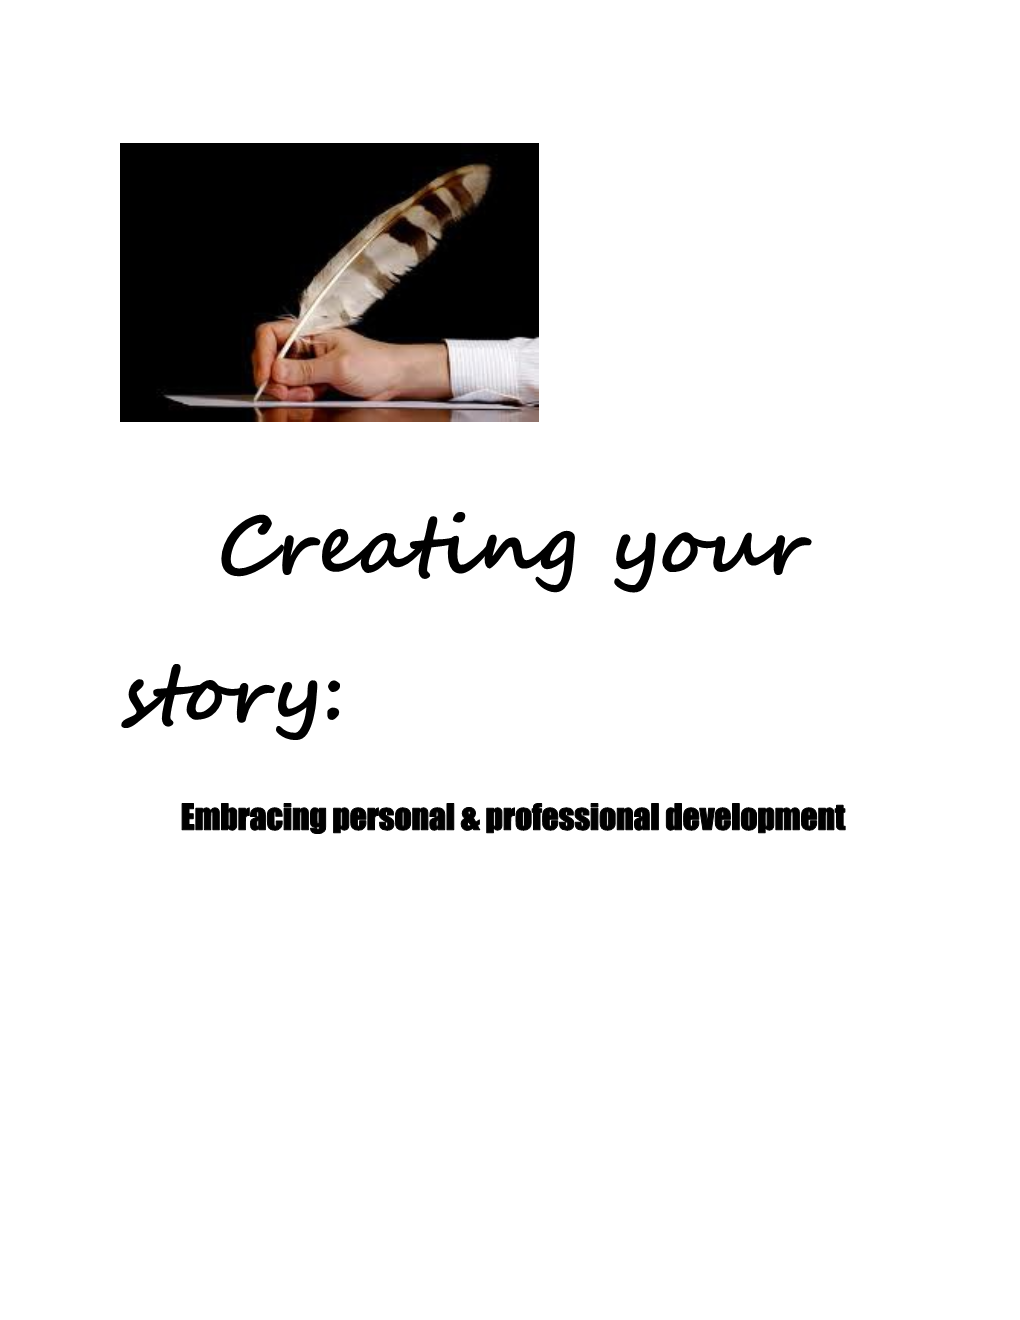 Embracing Personal & Professional Development